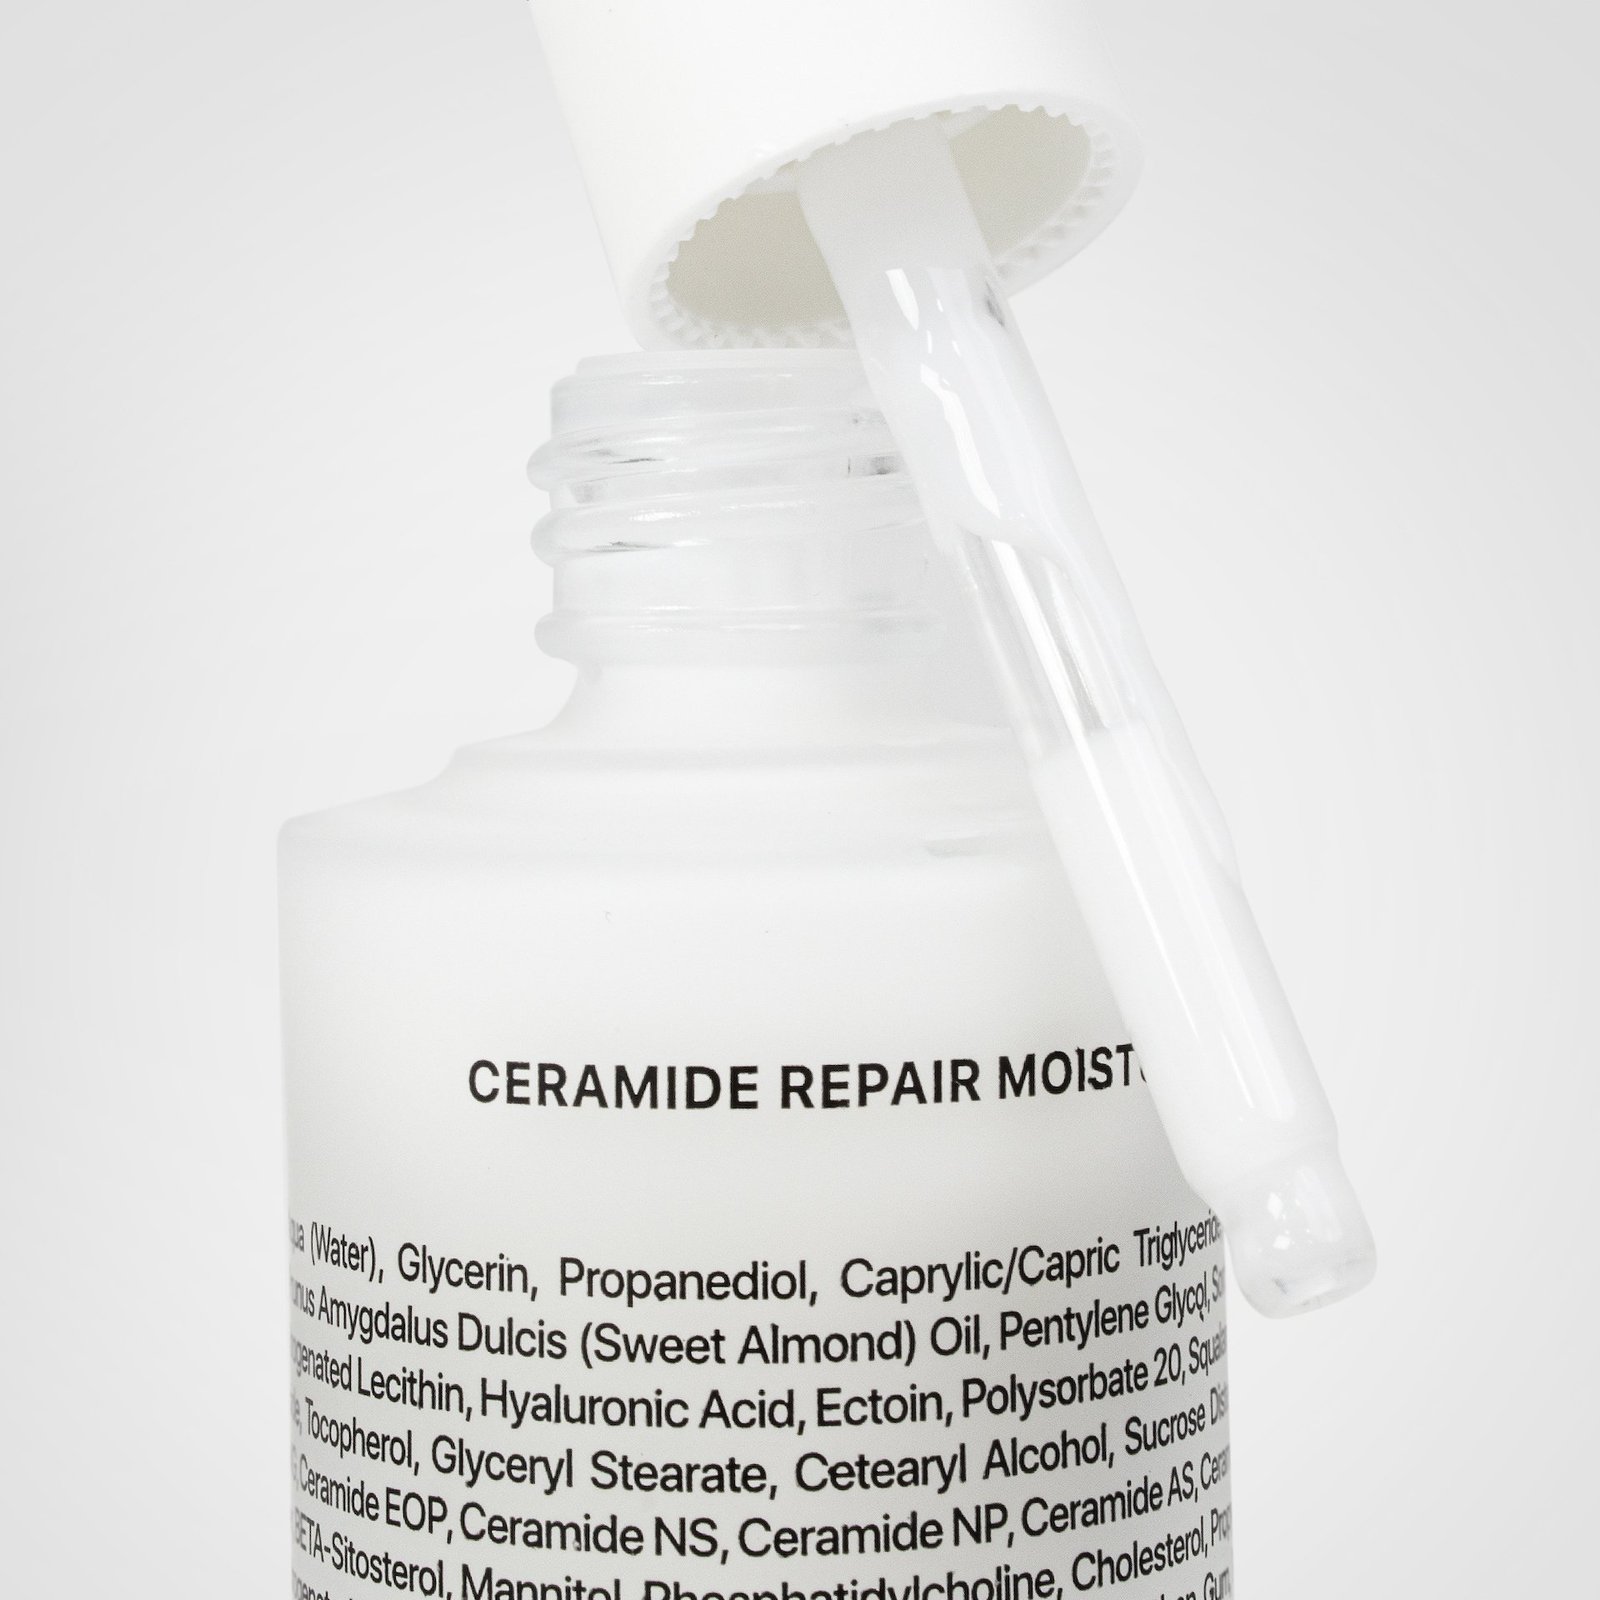 Niche Beauty Lab Transparent Lab Ceramide Repair Moisturizer 30 ml